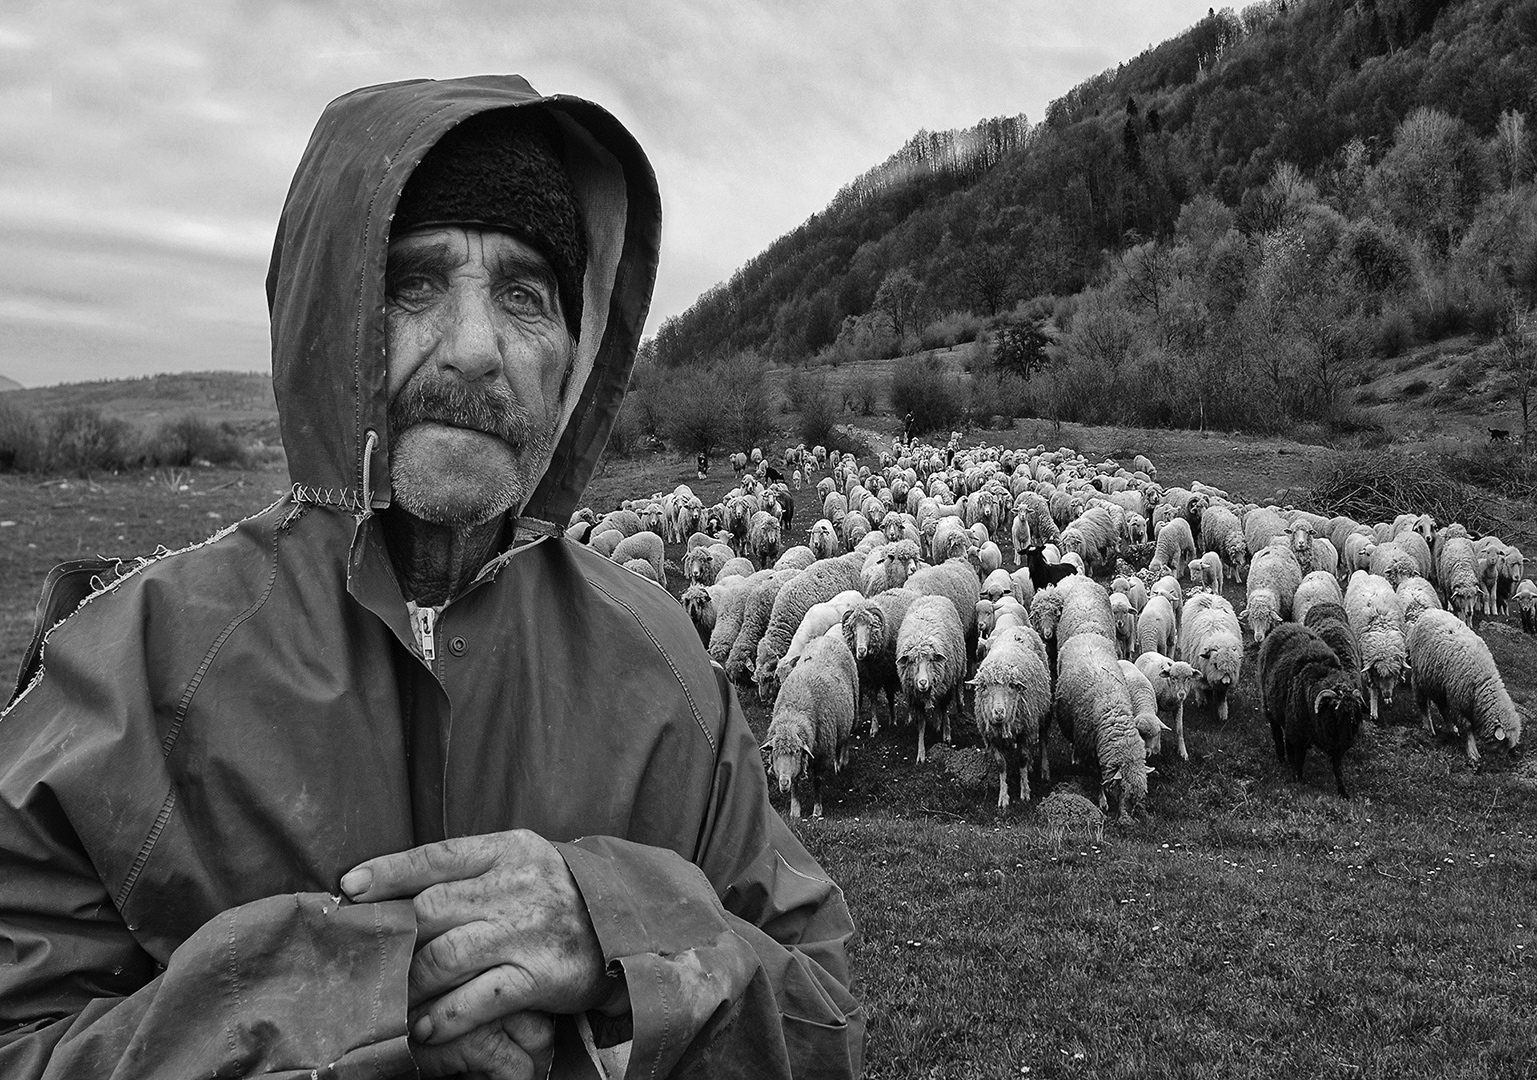 Shepherd with rain jacket, Søren Skov